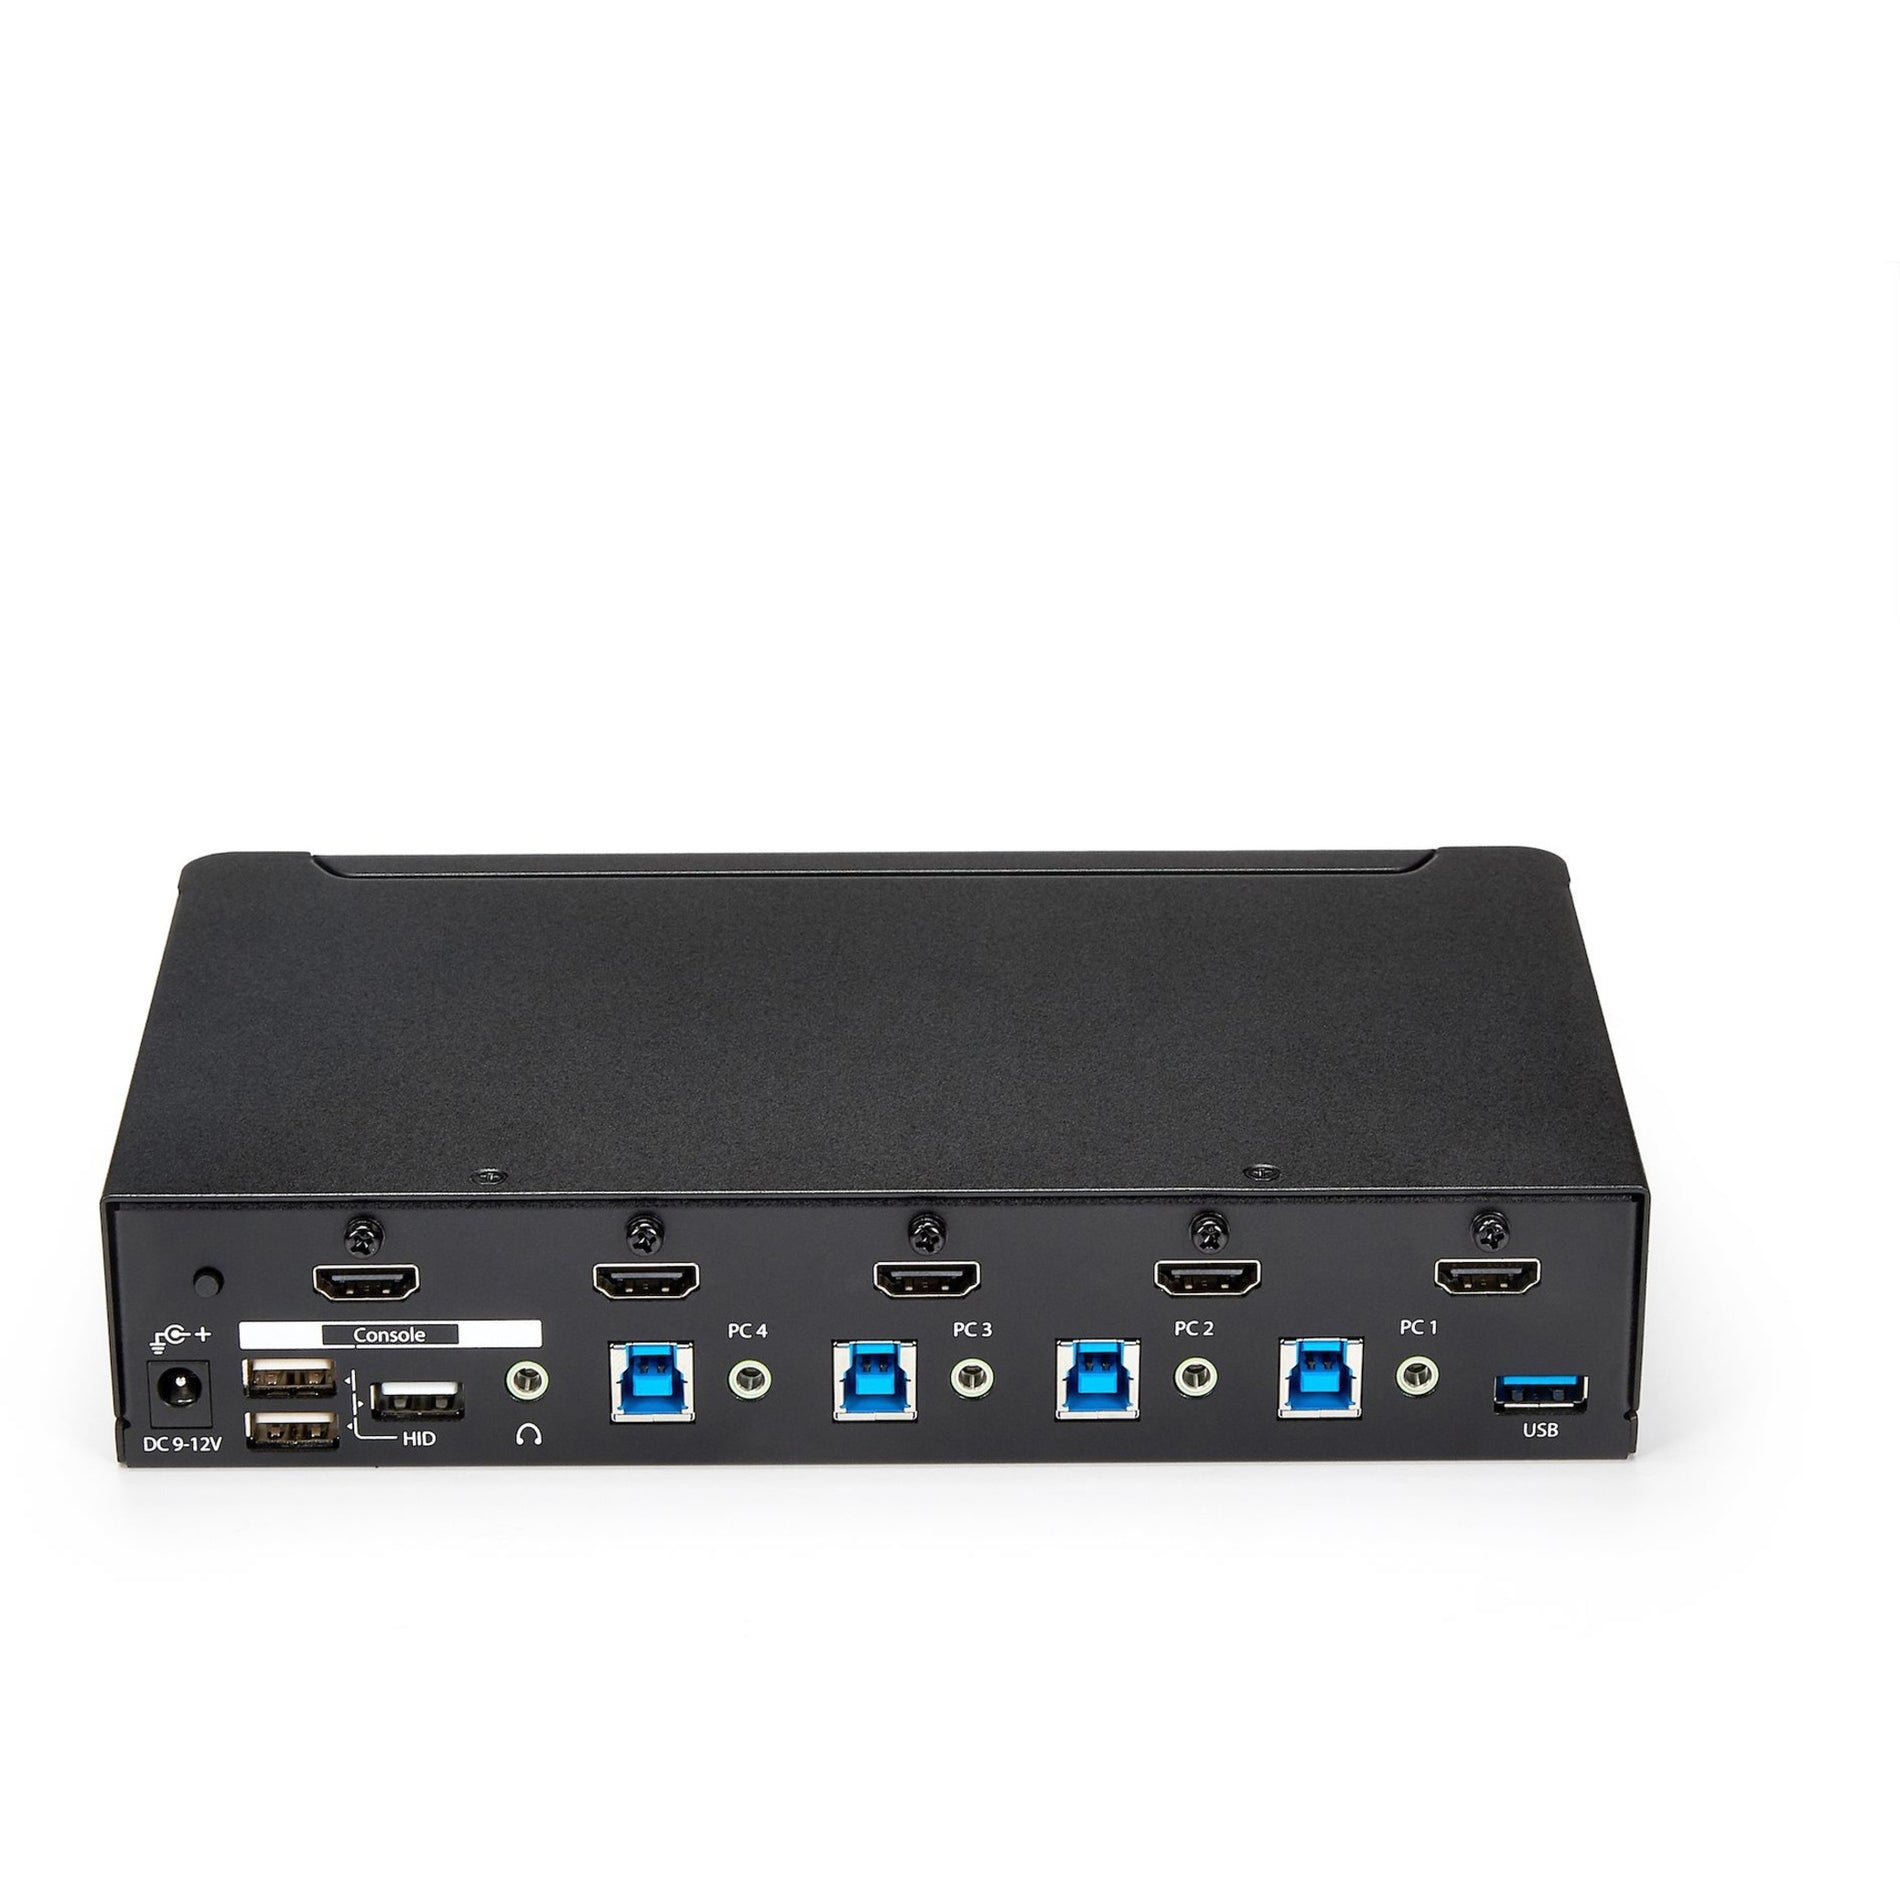 StarTech.com SV431HDU3A2 4-Port HDMI KVM Switch - Built-in USB 3.0 Hub 1080p  StarTech.com SV431HDU3A2 4-Port HDMI KVM Switch - Hub USB 3.0 incorporato 1080p